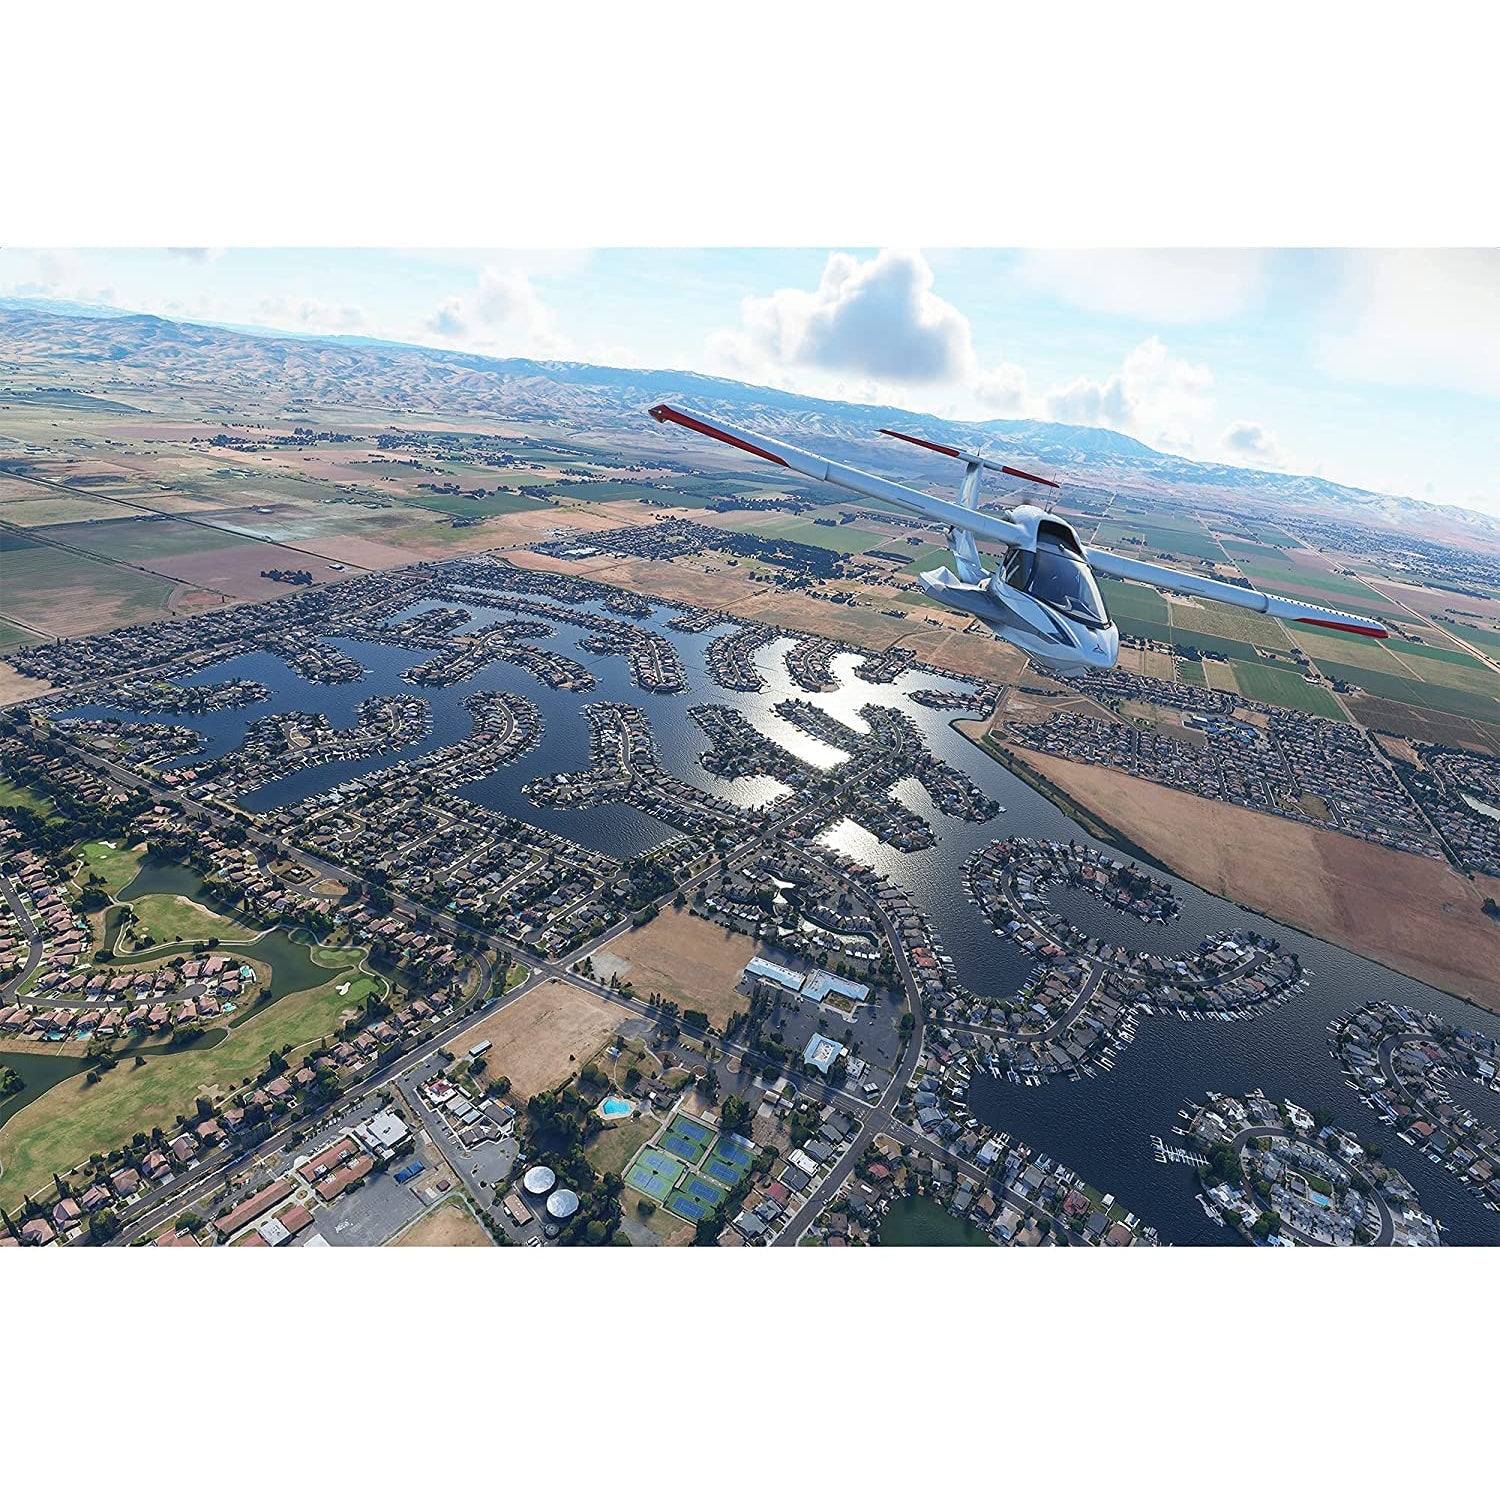 Microsoft Flight Simulator - Xbox Series X - Refurbished Pristine